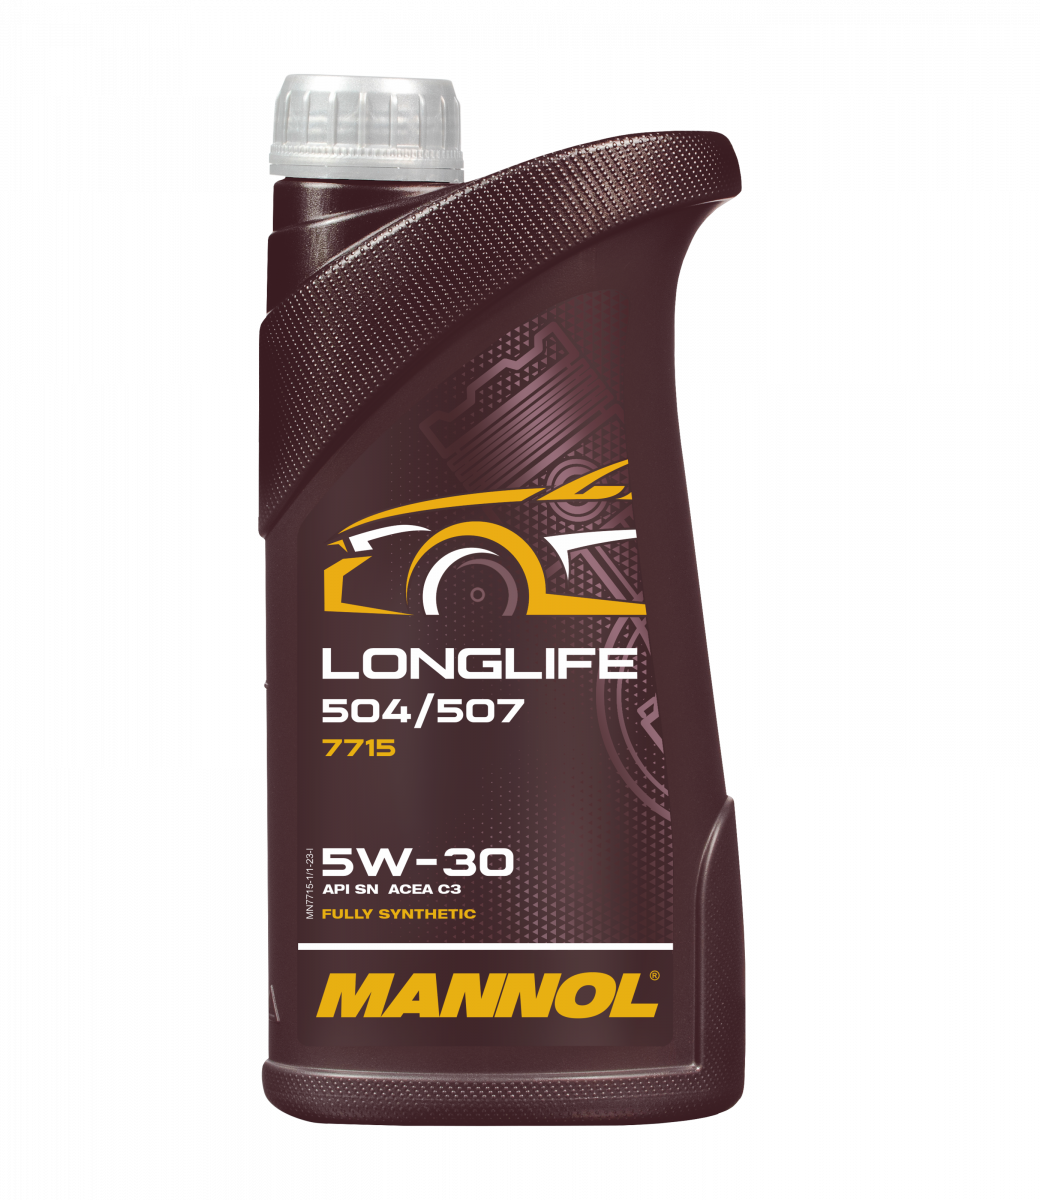 MANNOL 7715 Longlife 504/507 5W-30 Fully Synthetic Car German Engine Oil,  5L.